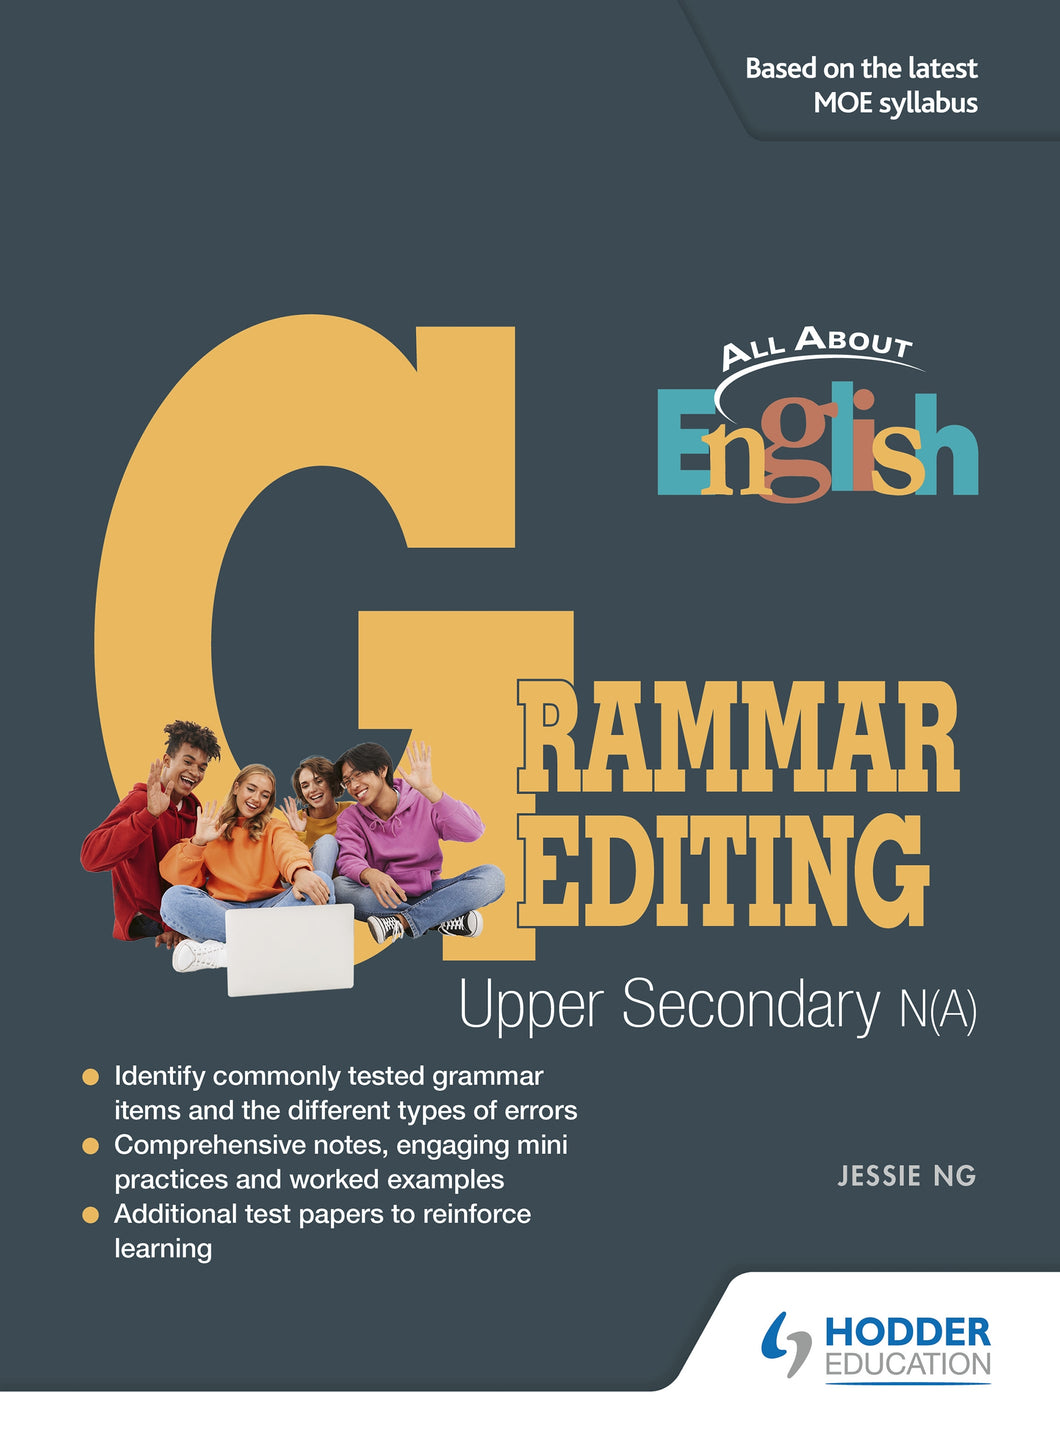 KRSS - English - All About English Grammar Editing Upper Sec. 3 (NA)